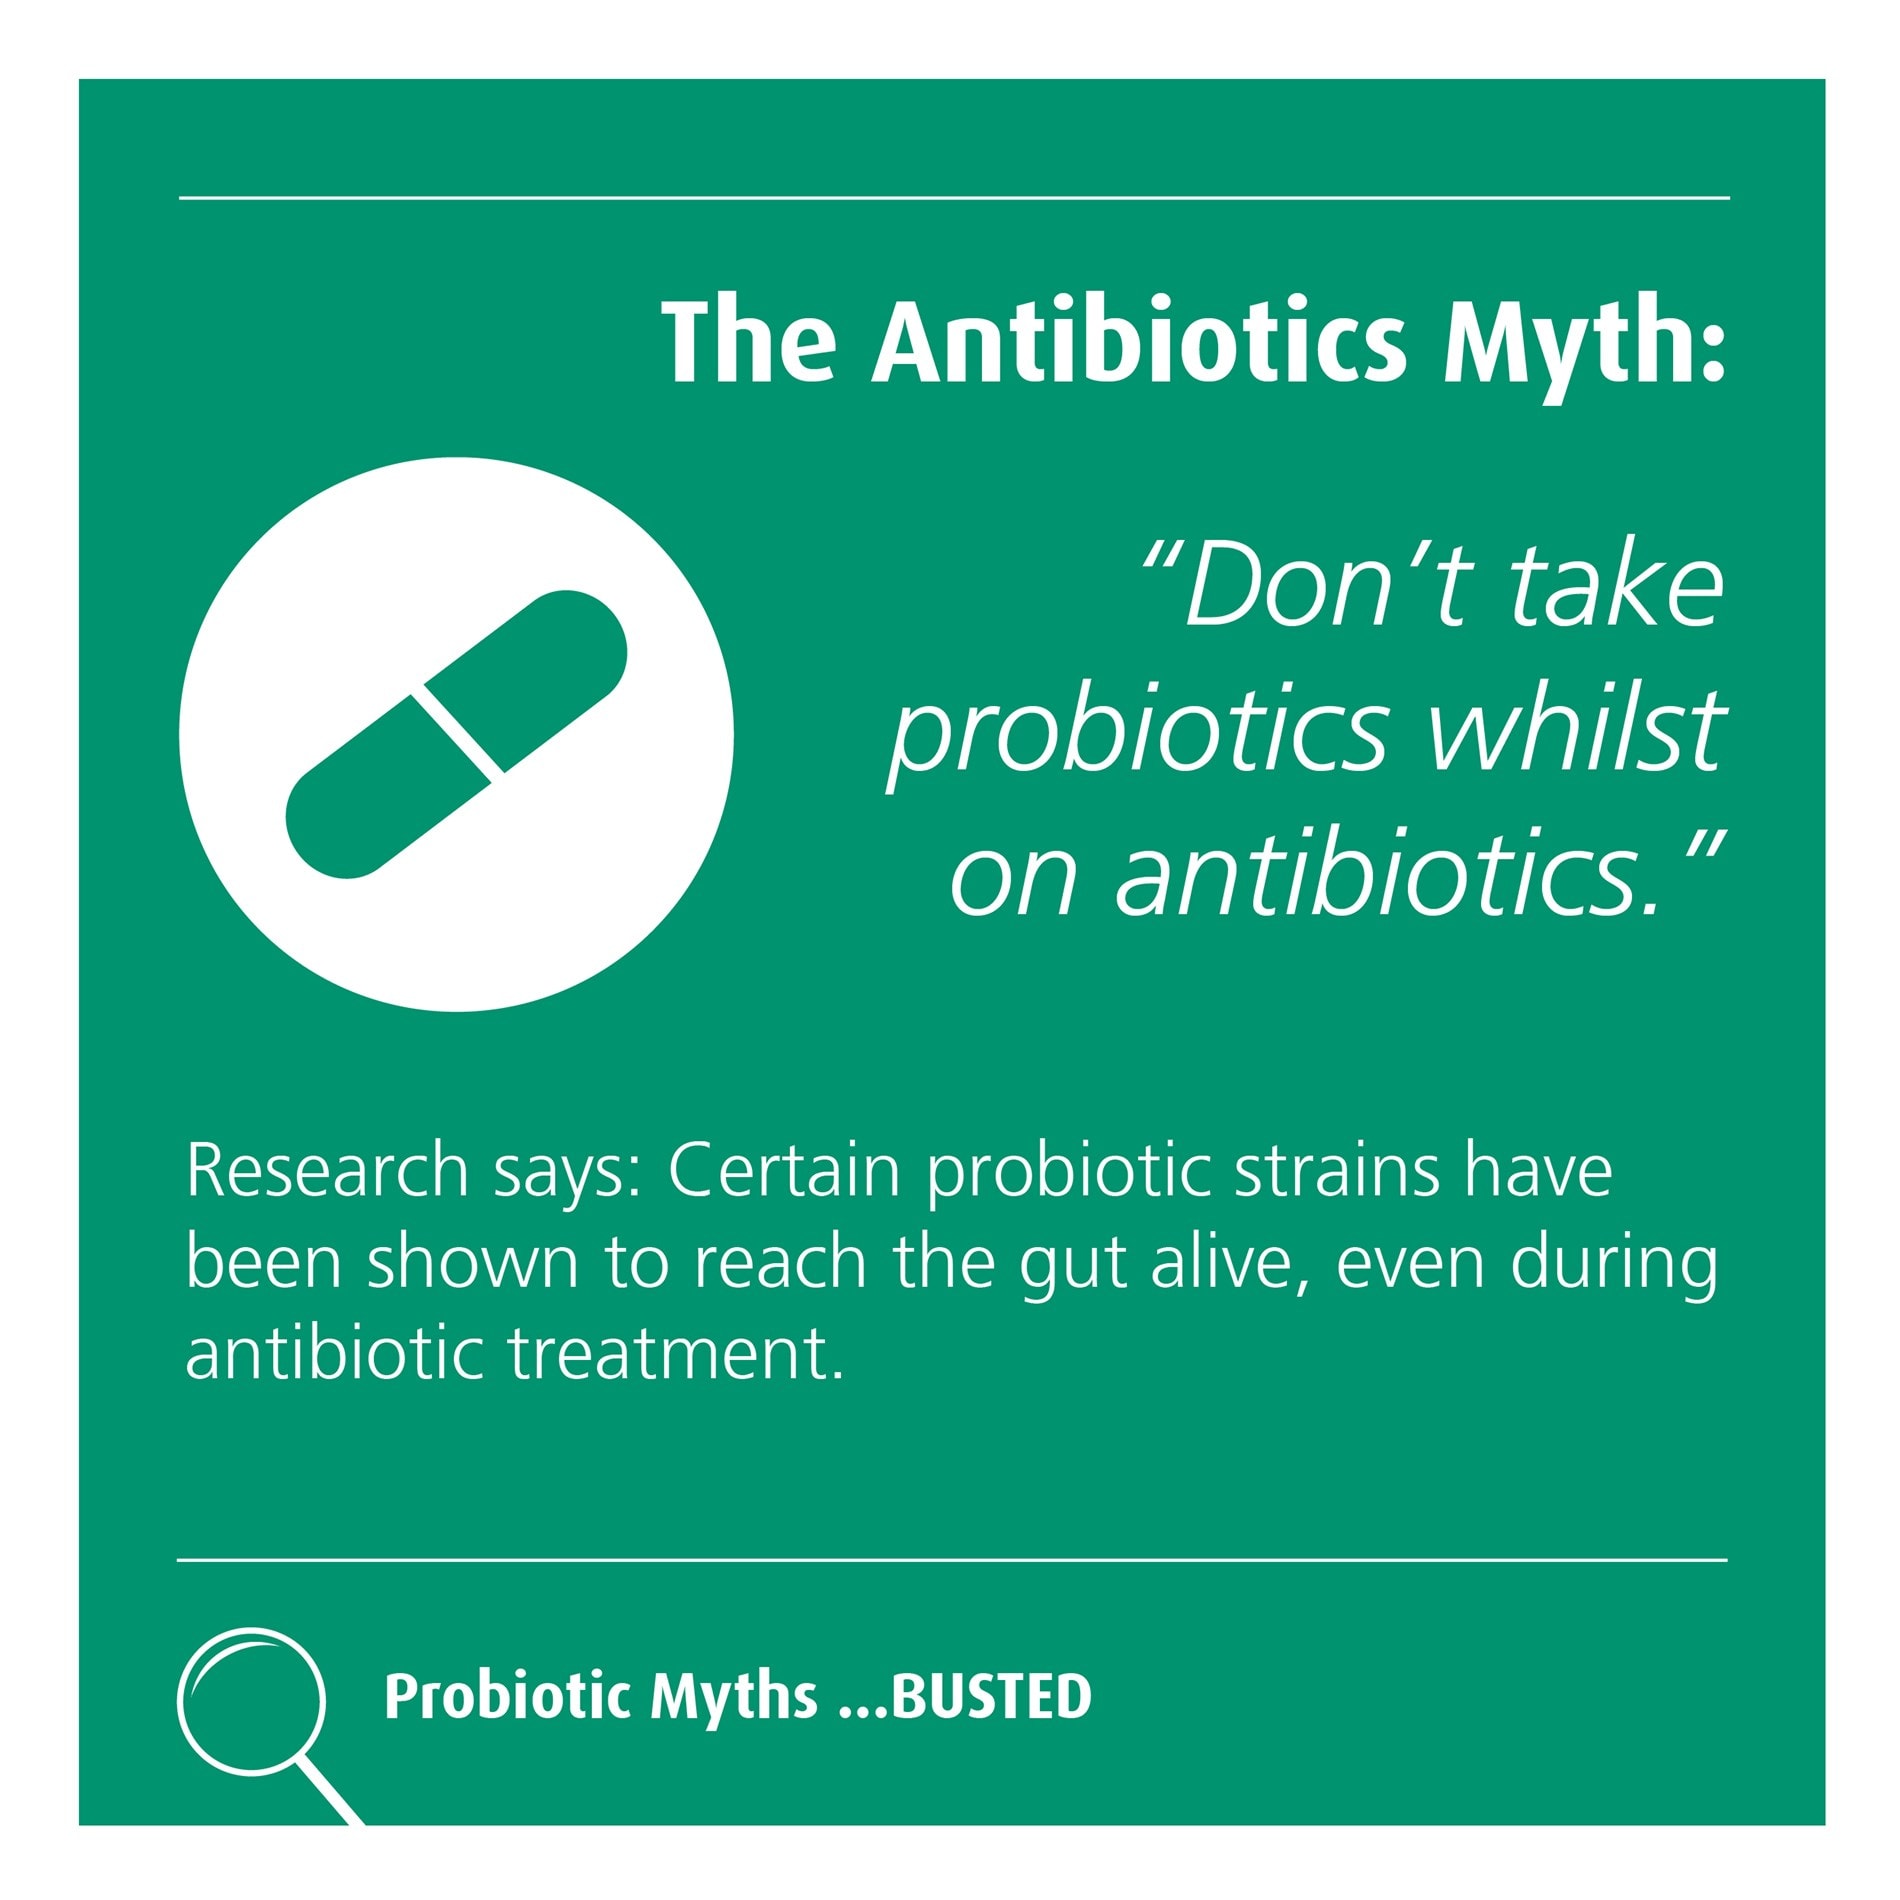 The antibiotic myth